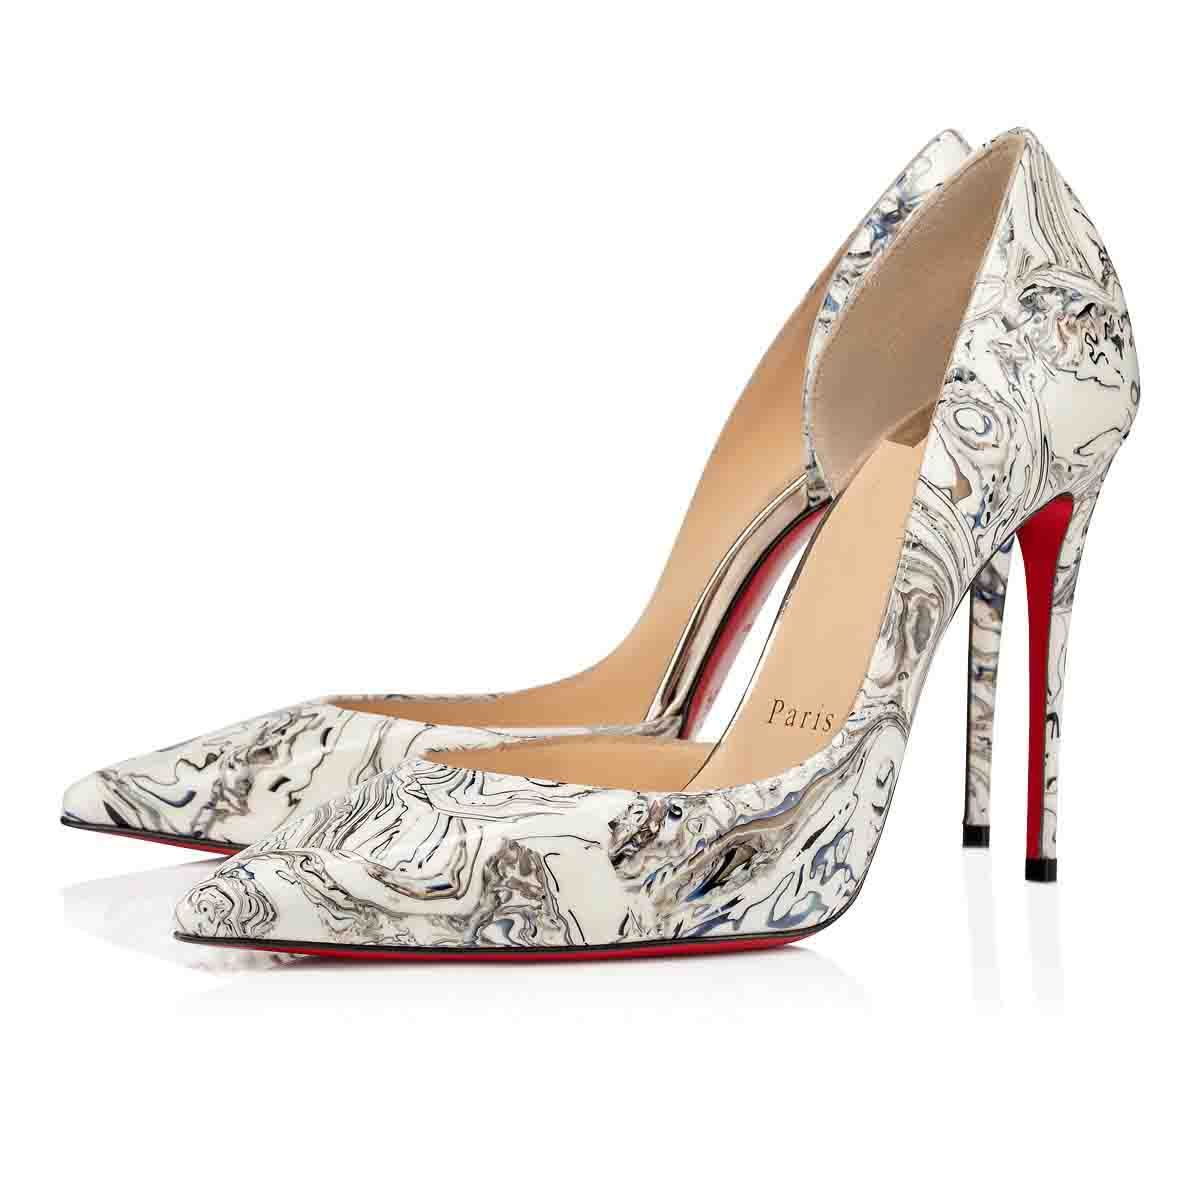 heels with glitter bottom